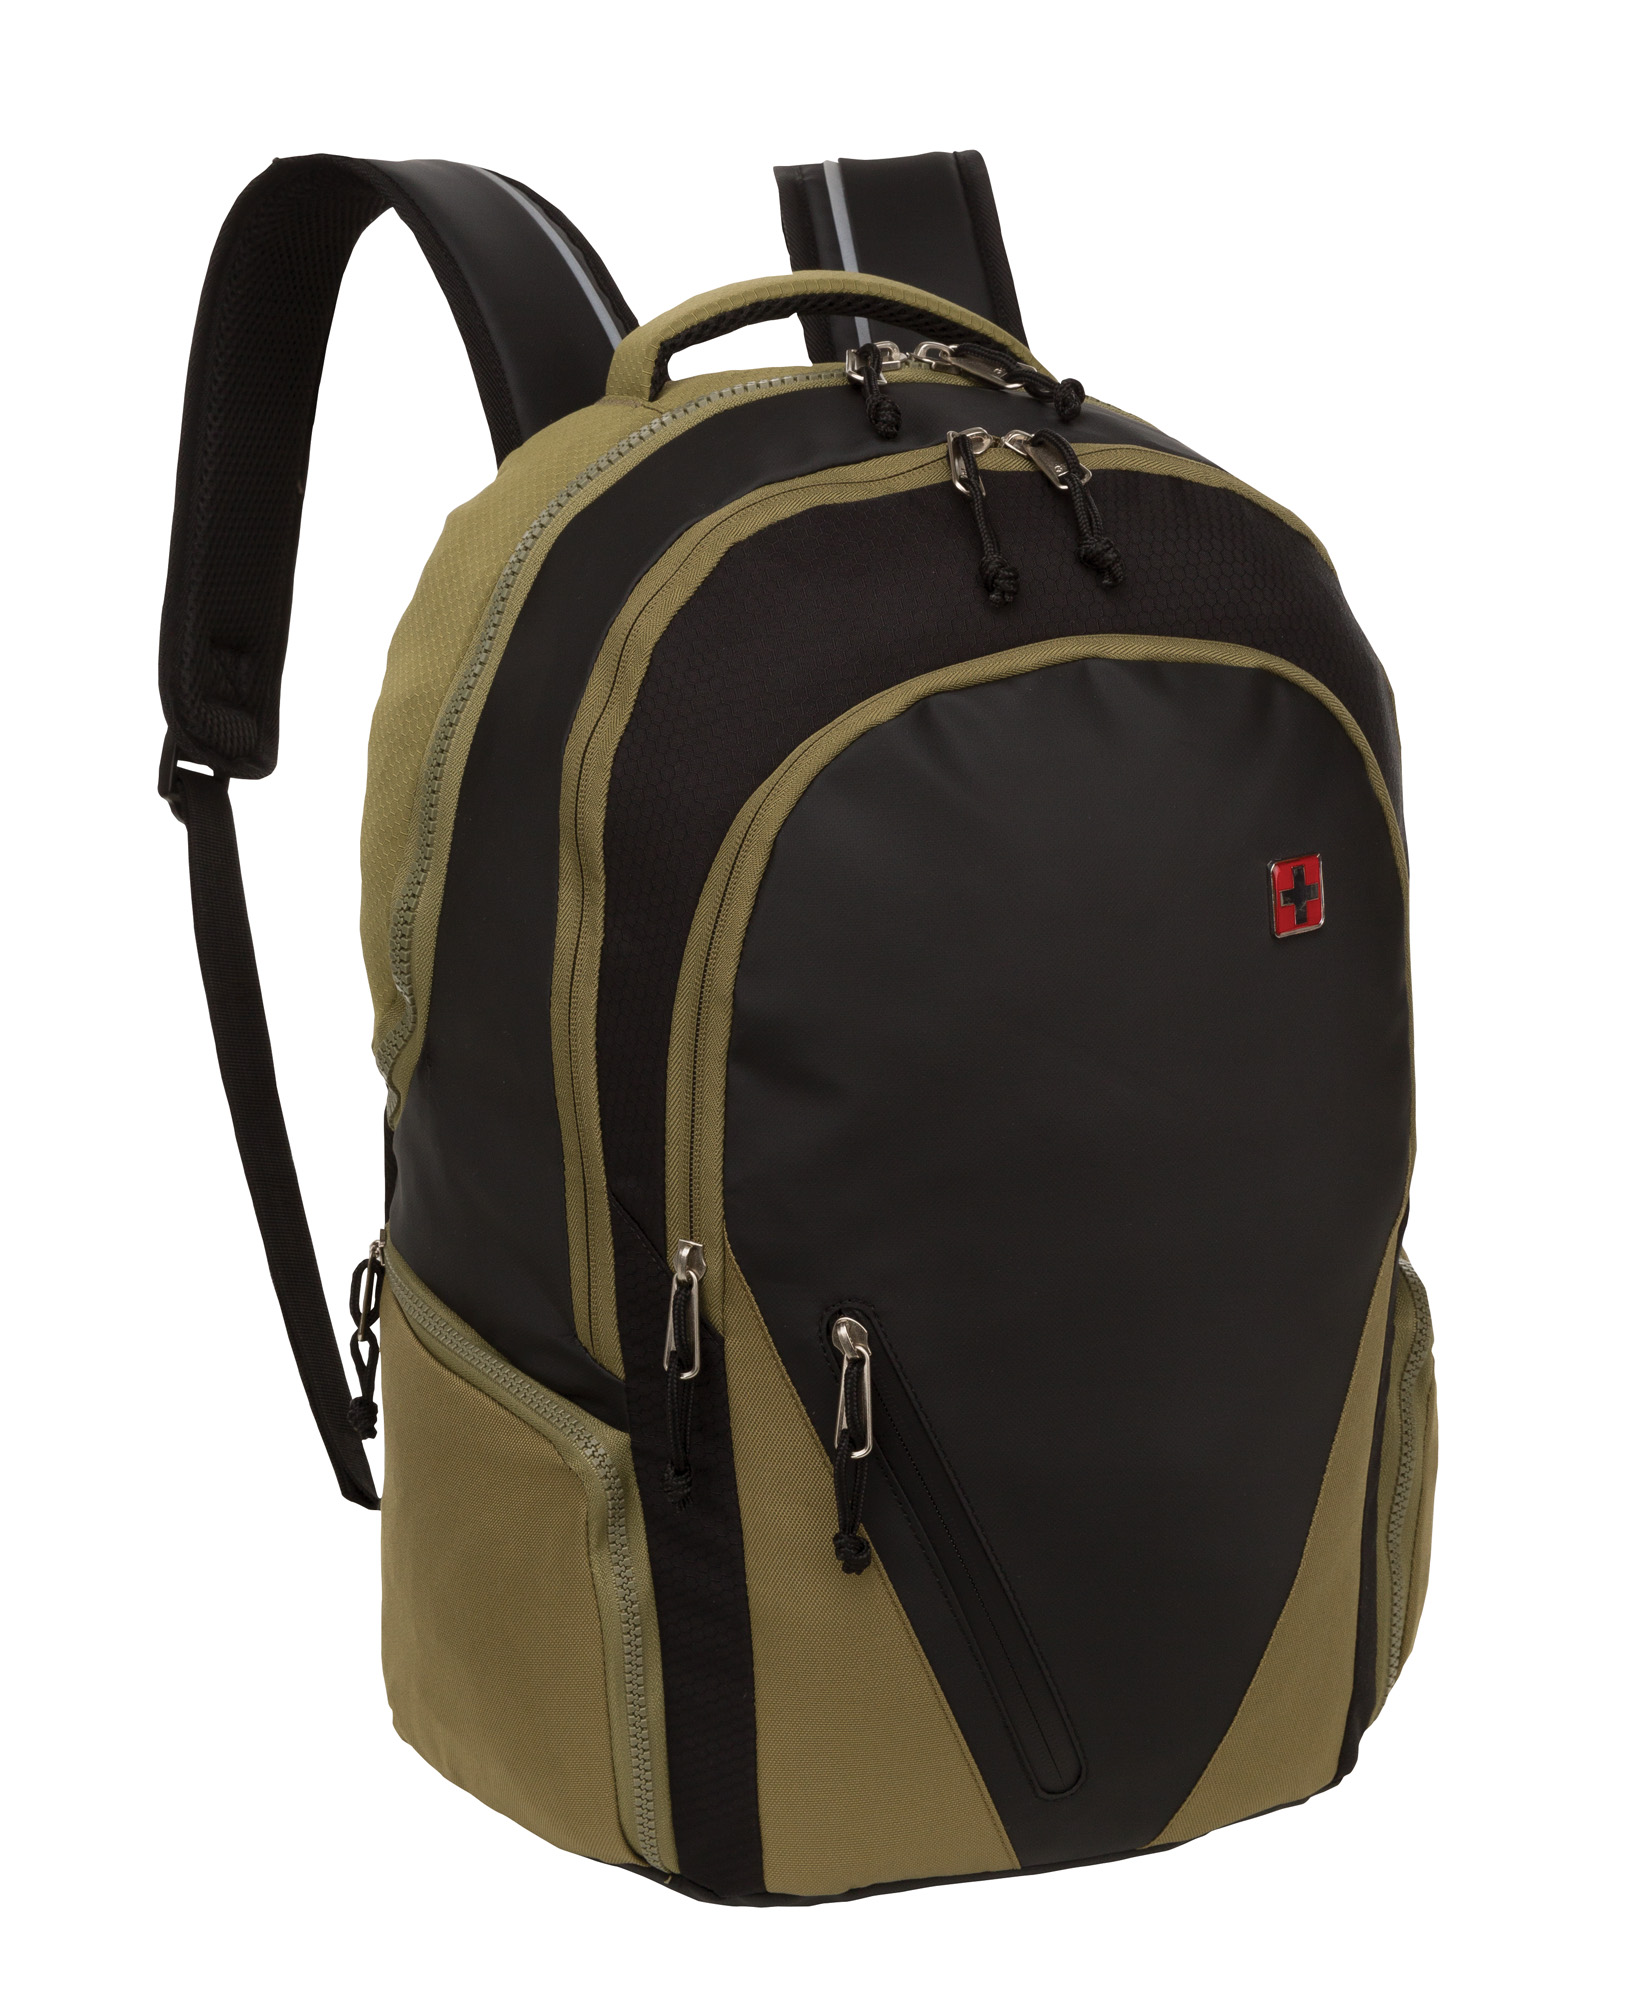 SwissTech Basel 39.2 Ltr School Backpack Laptop Sleeve, Olive Green, Unisex, Adult, Teen, Polyester - image 1 of 11